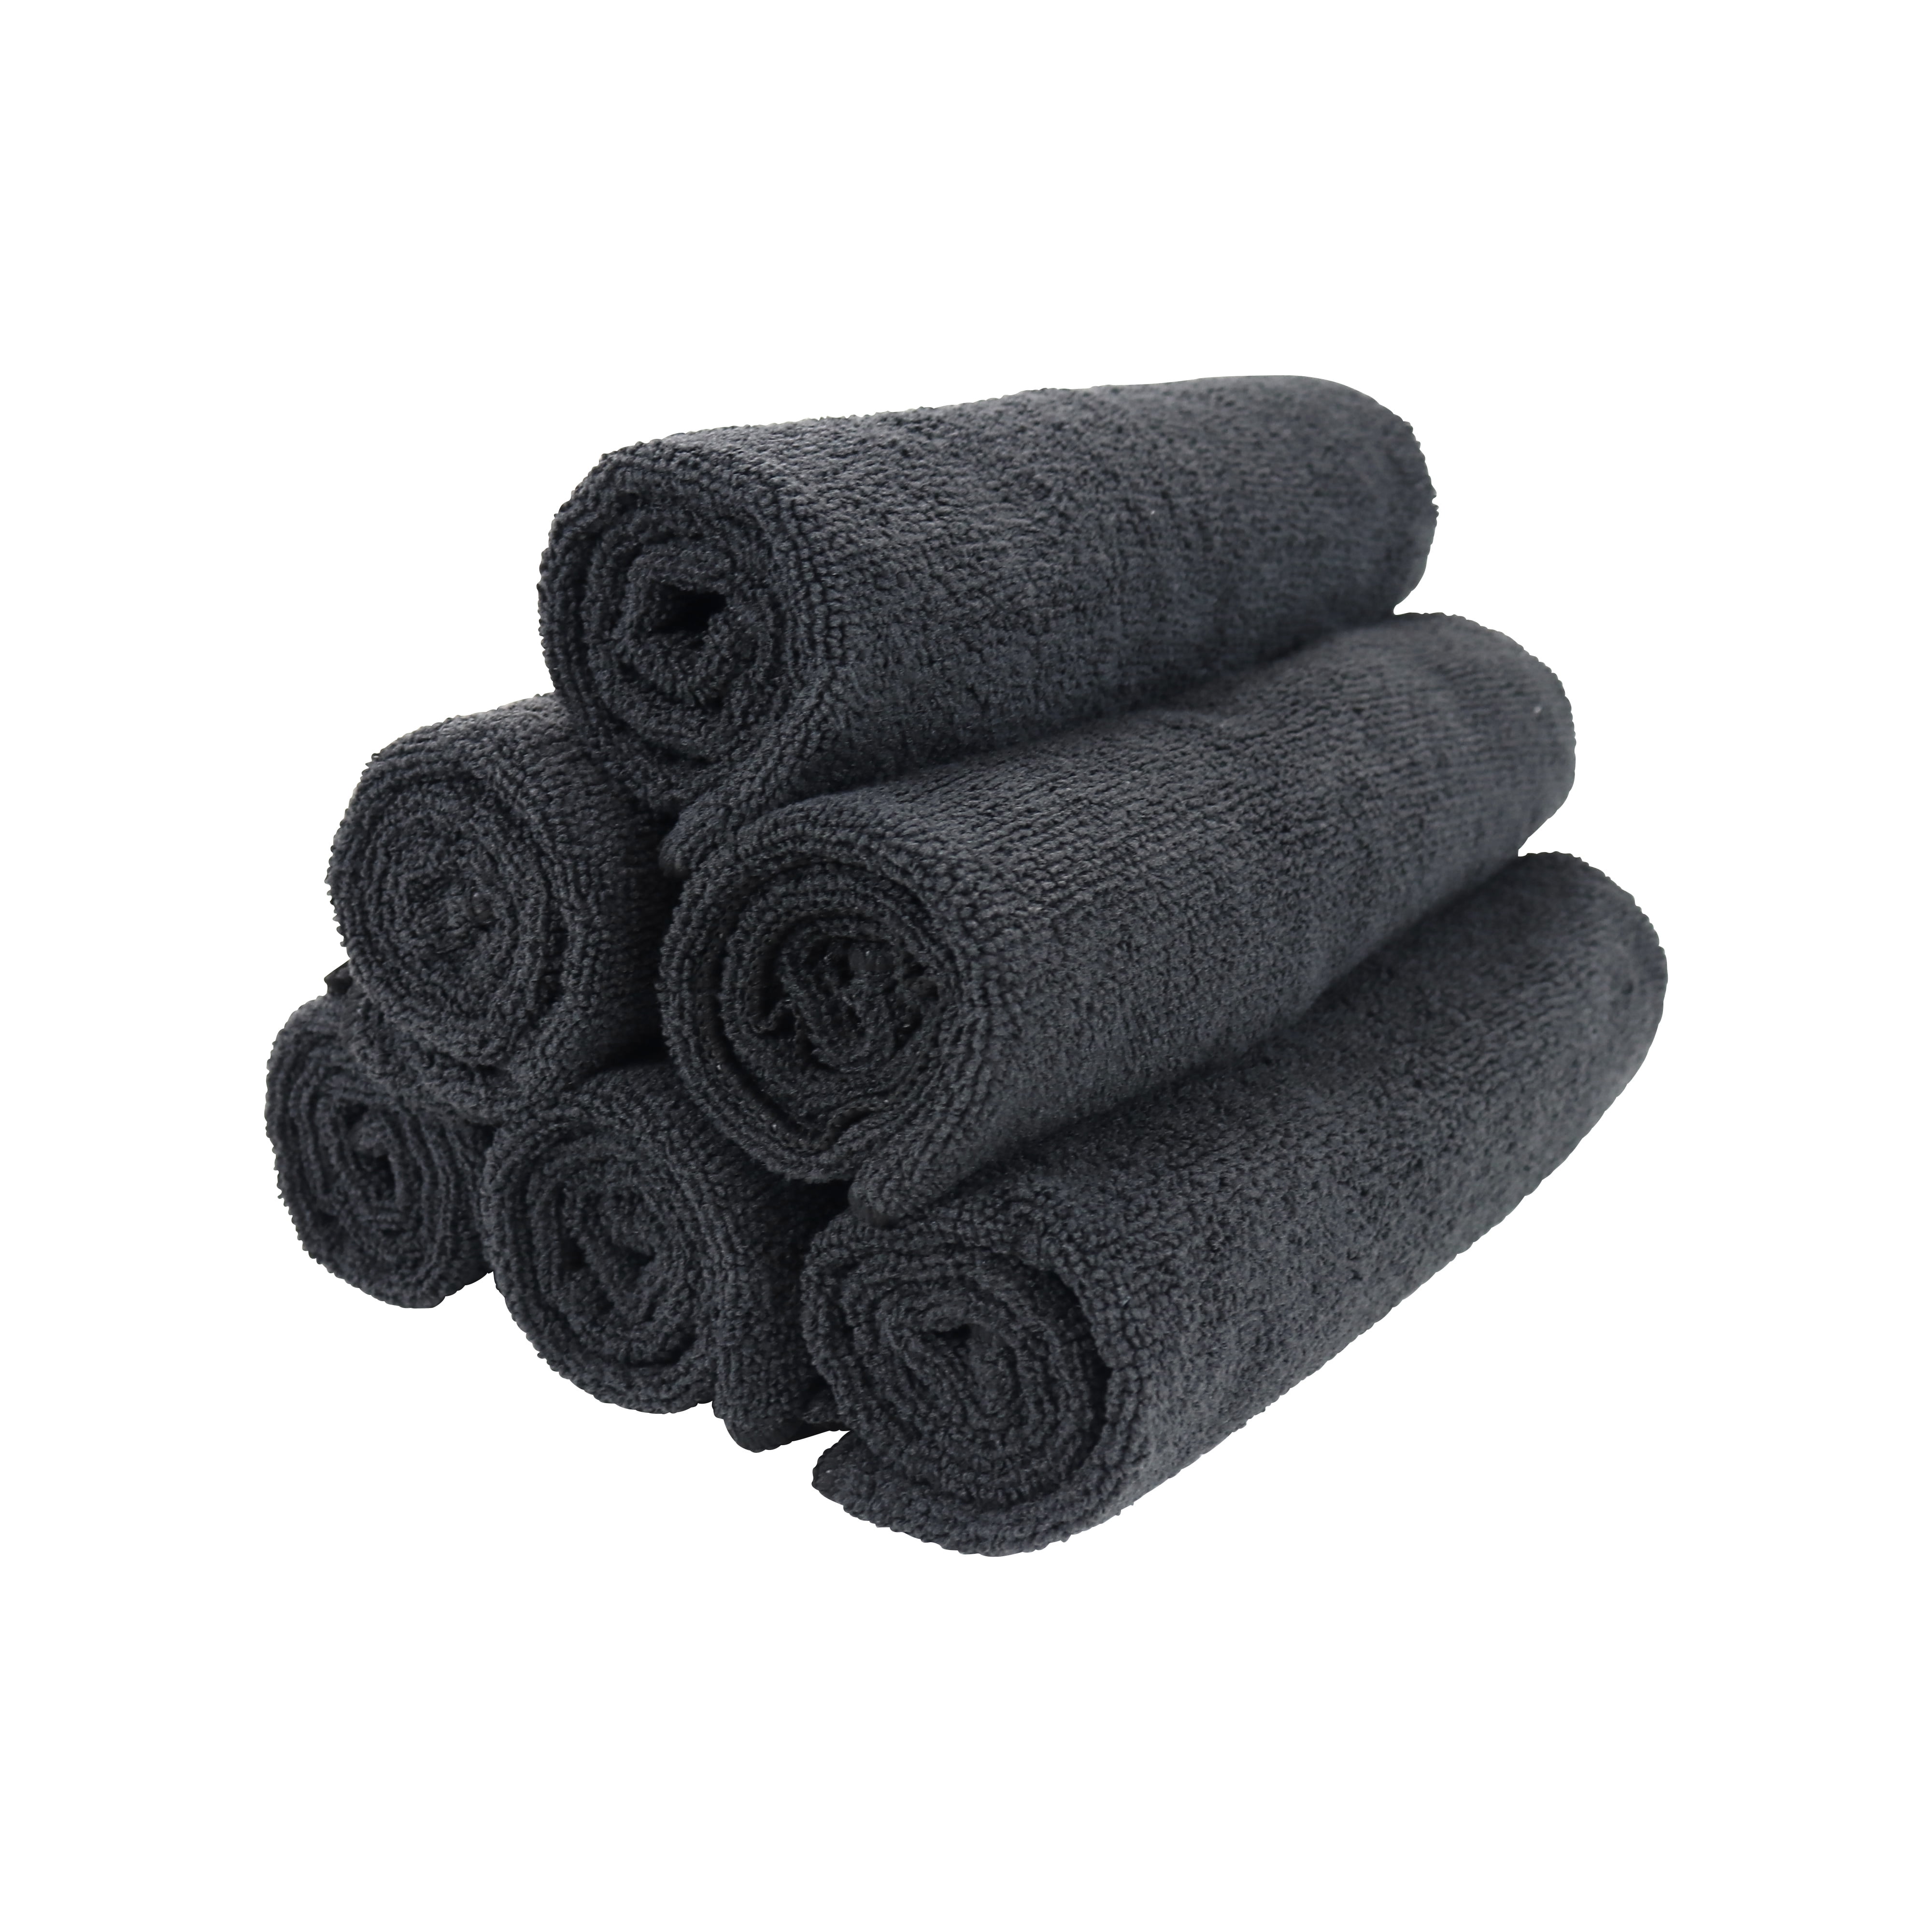 Bleach Proof Salon Towels 16x27 - All Colors & Quantities